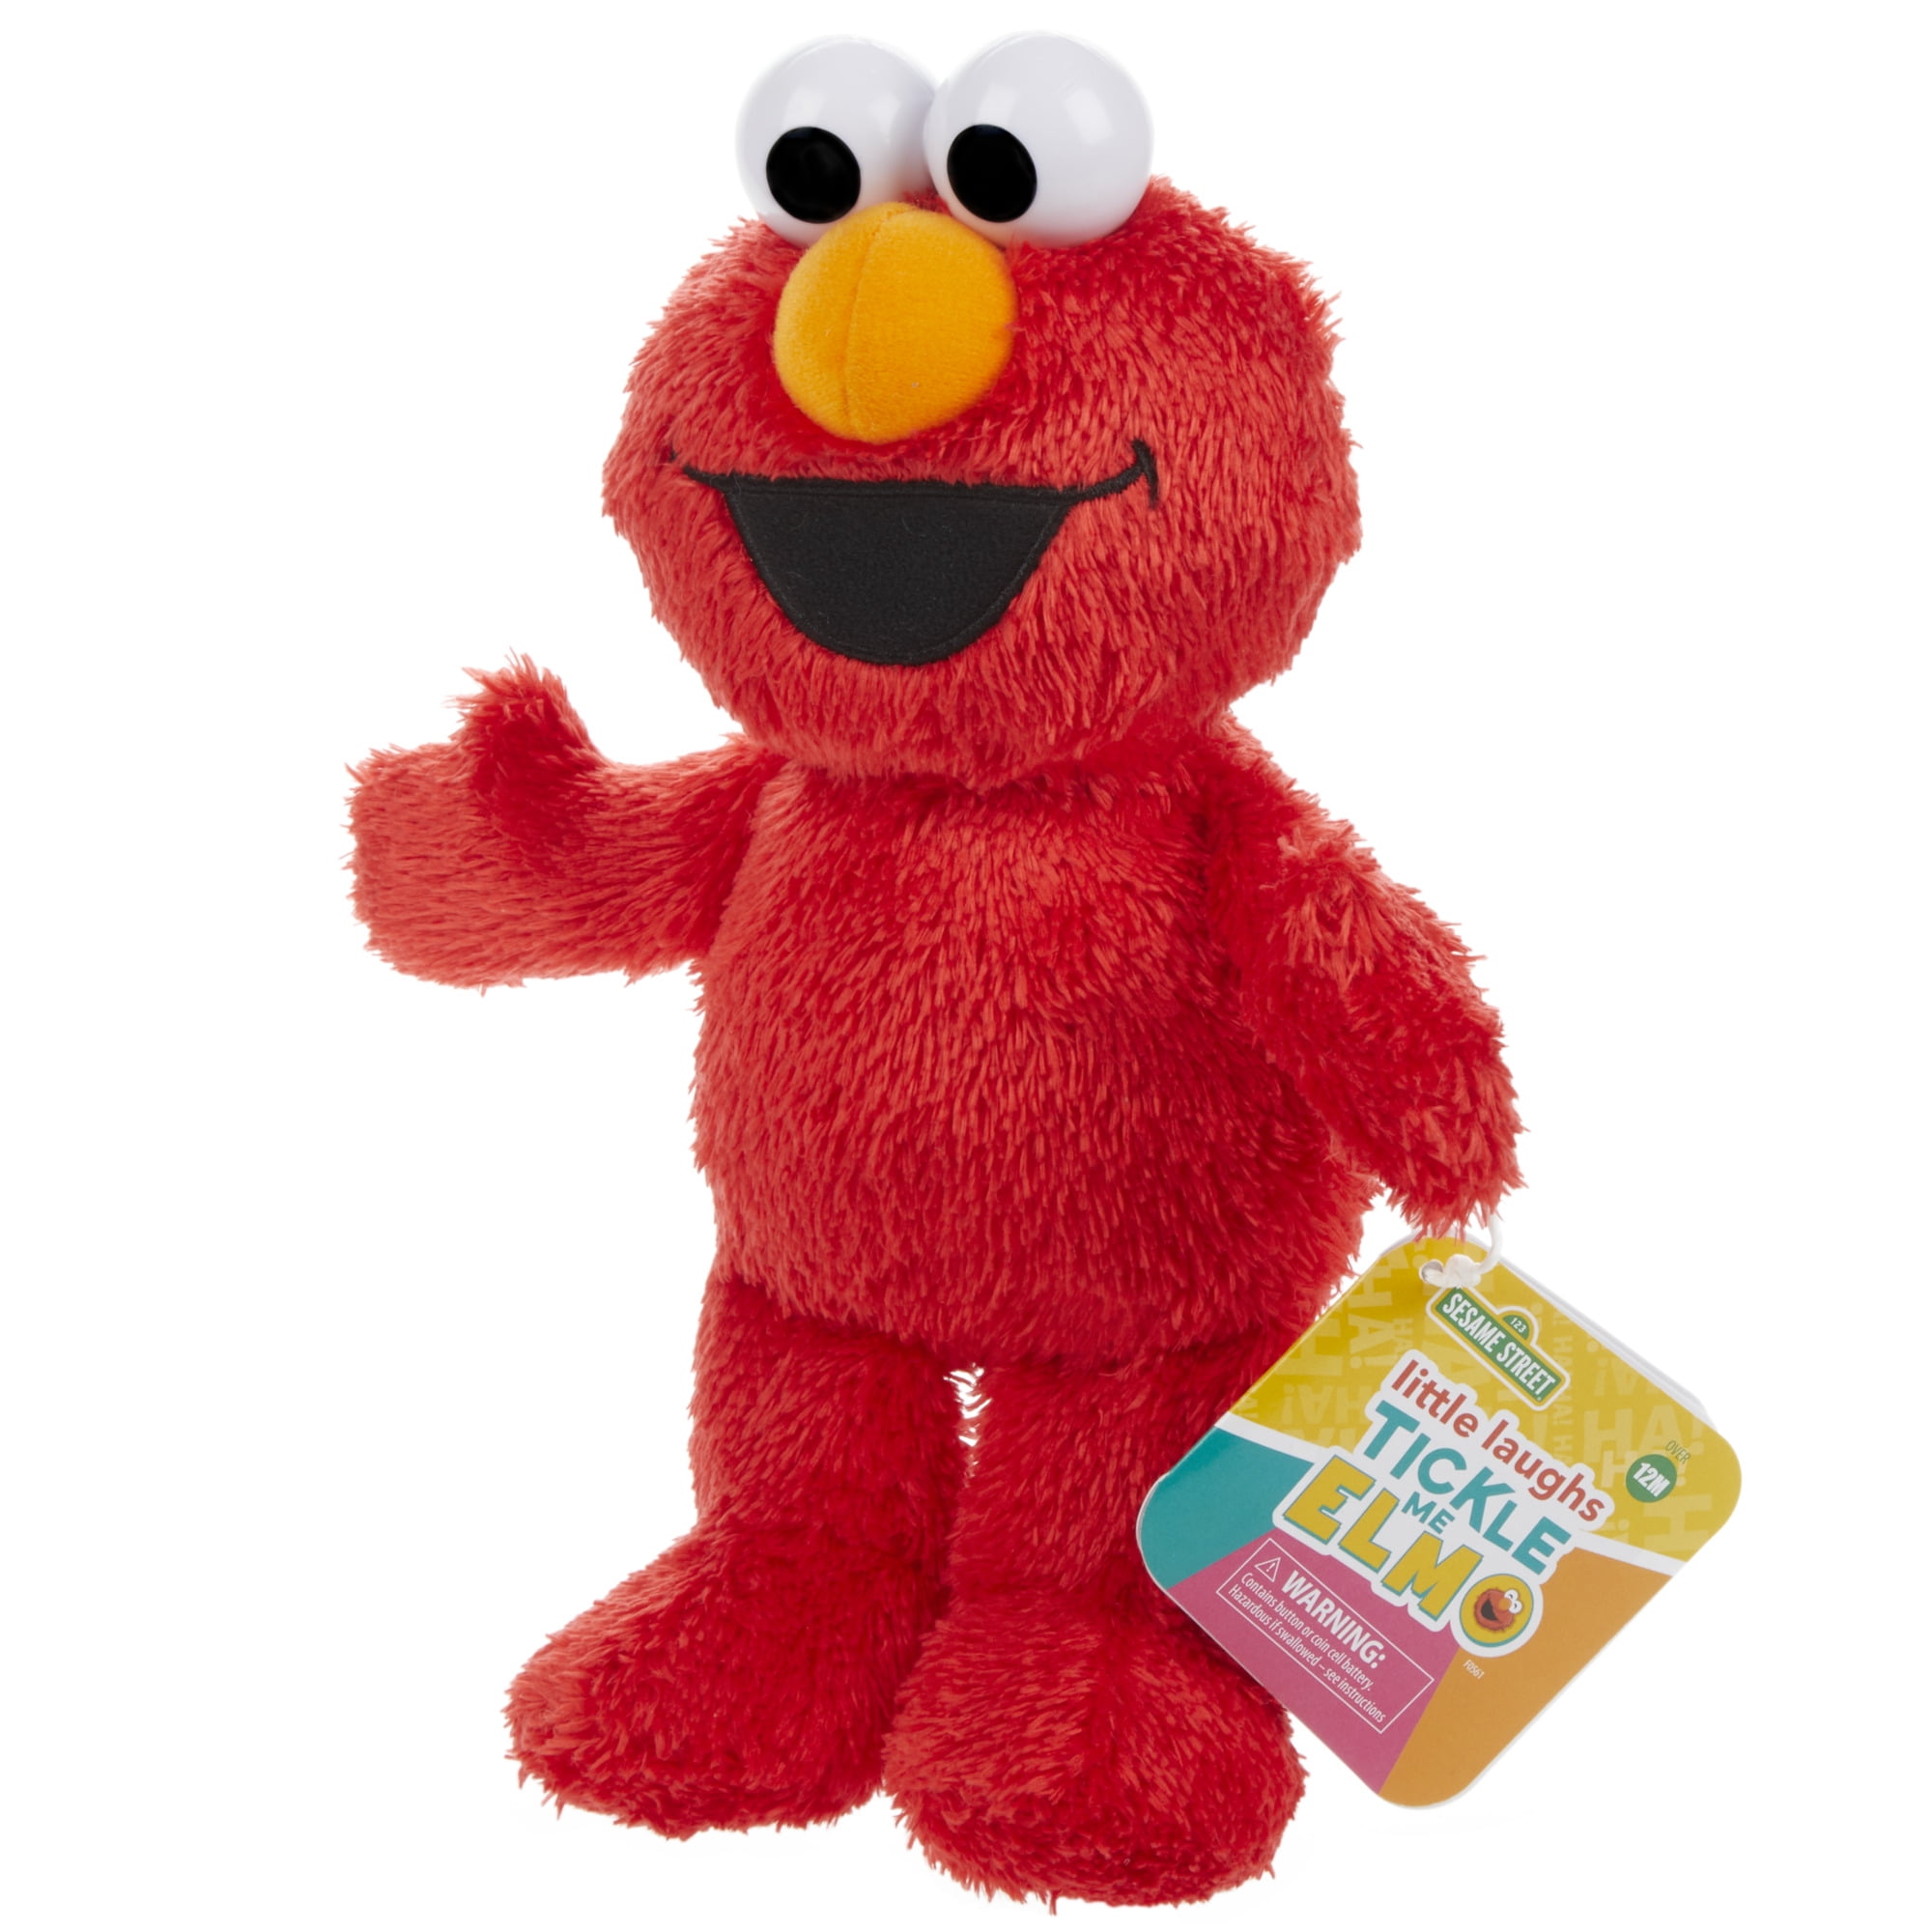 Details about   Sesame Street Elmo Plush Stuffed Animal Toy Huggable Talking 14 Inches Fun Gift 